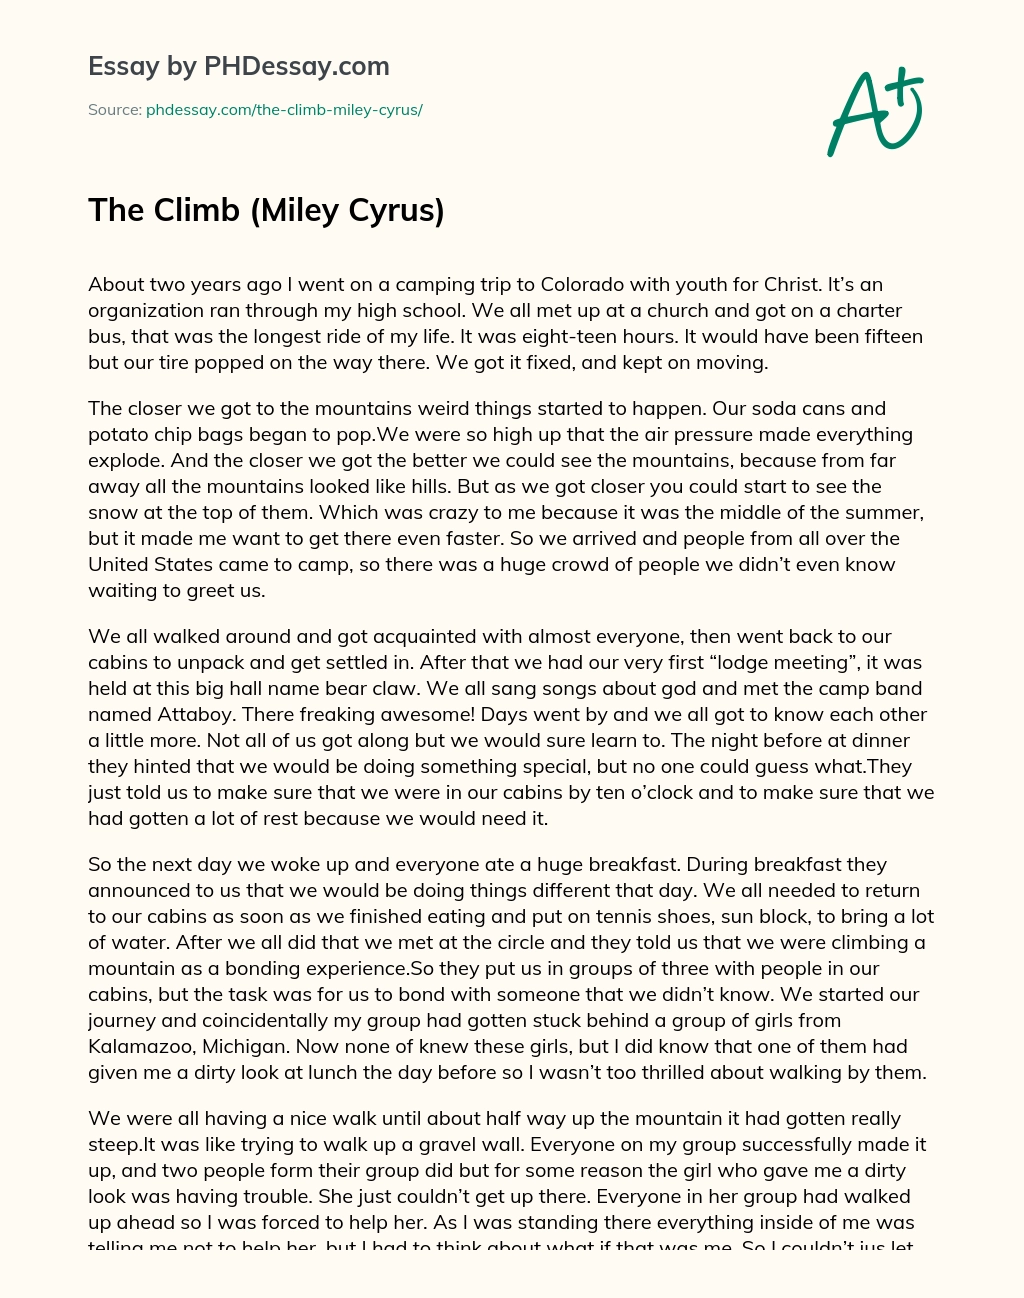 The Climb (Miley Cyrus) essay